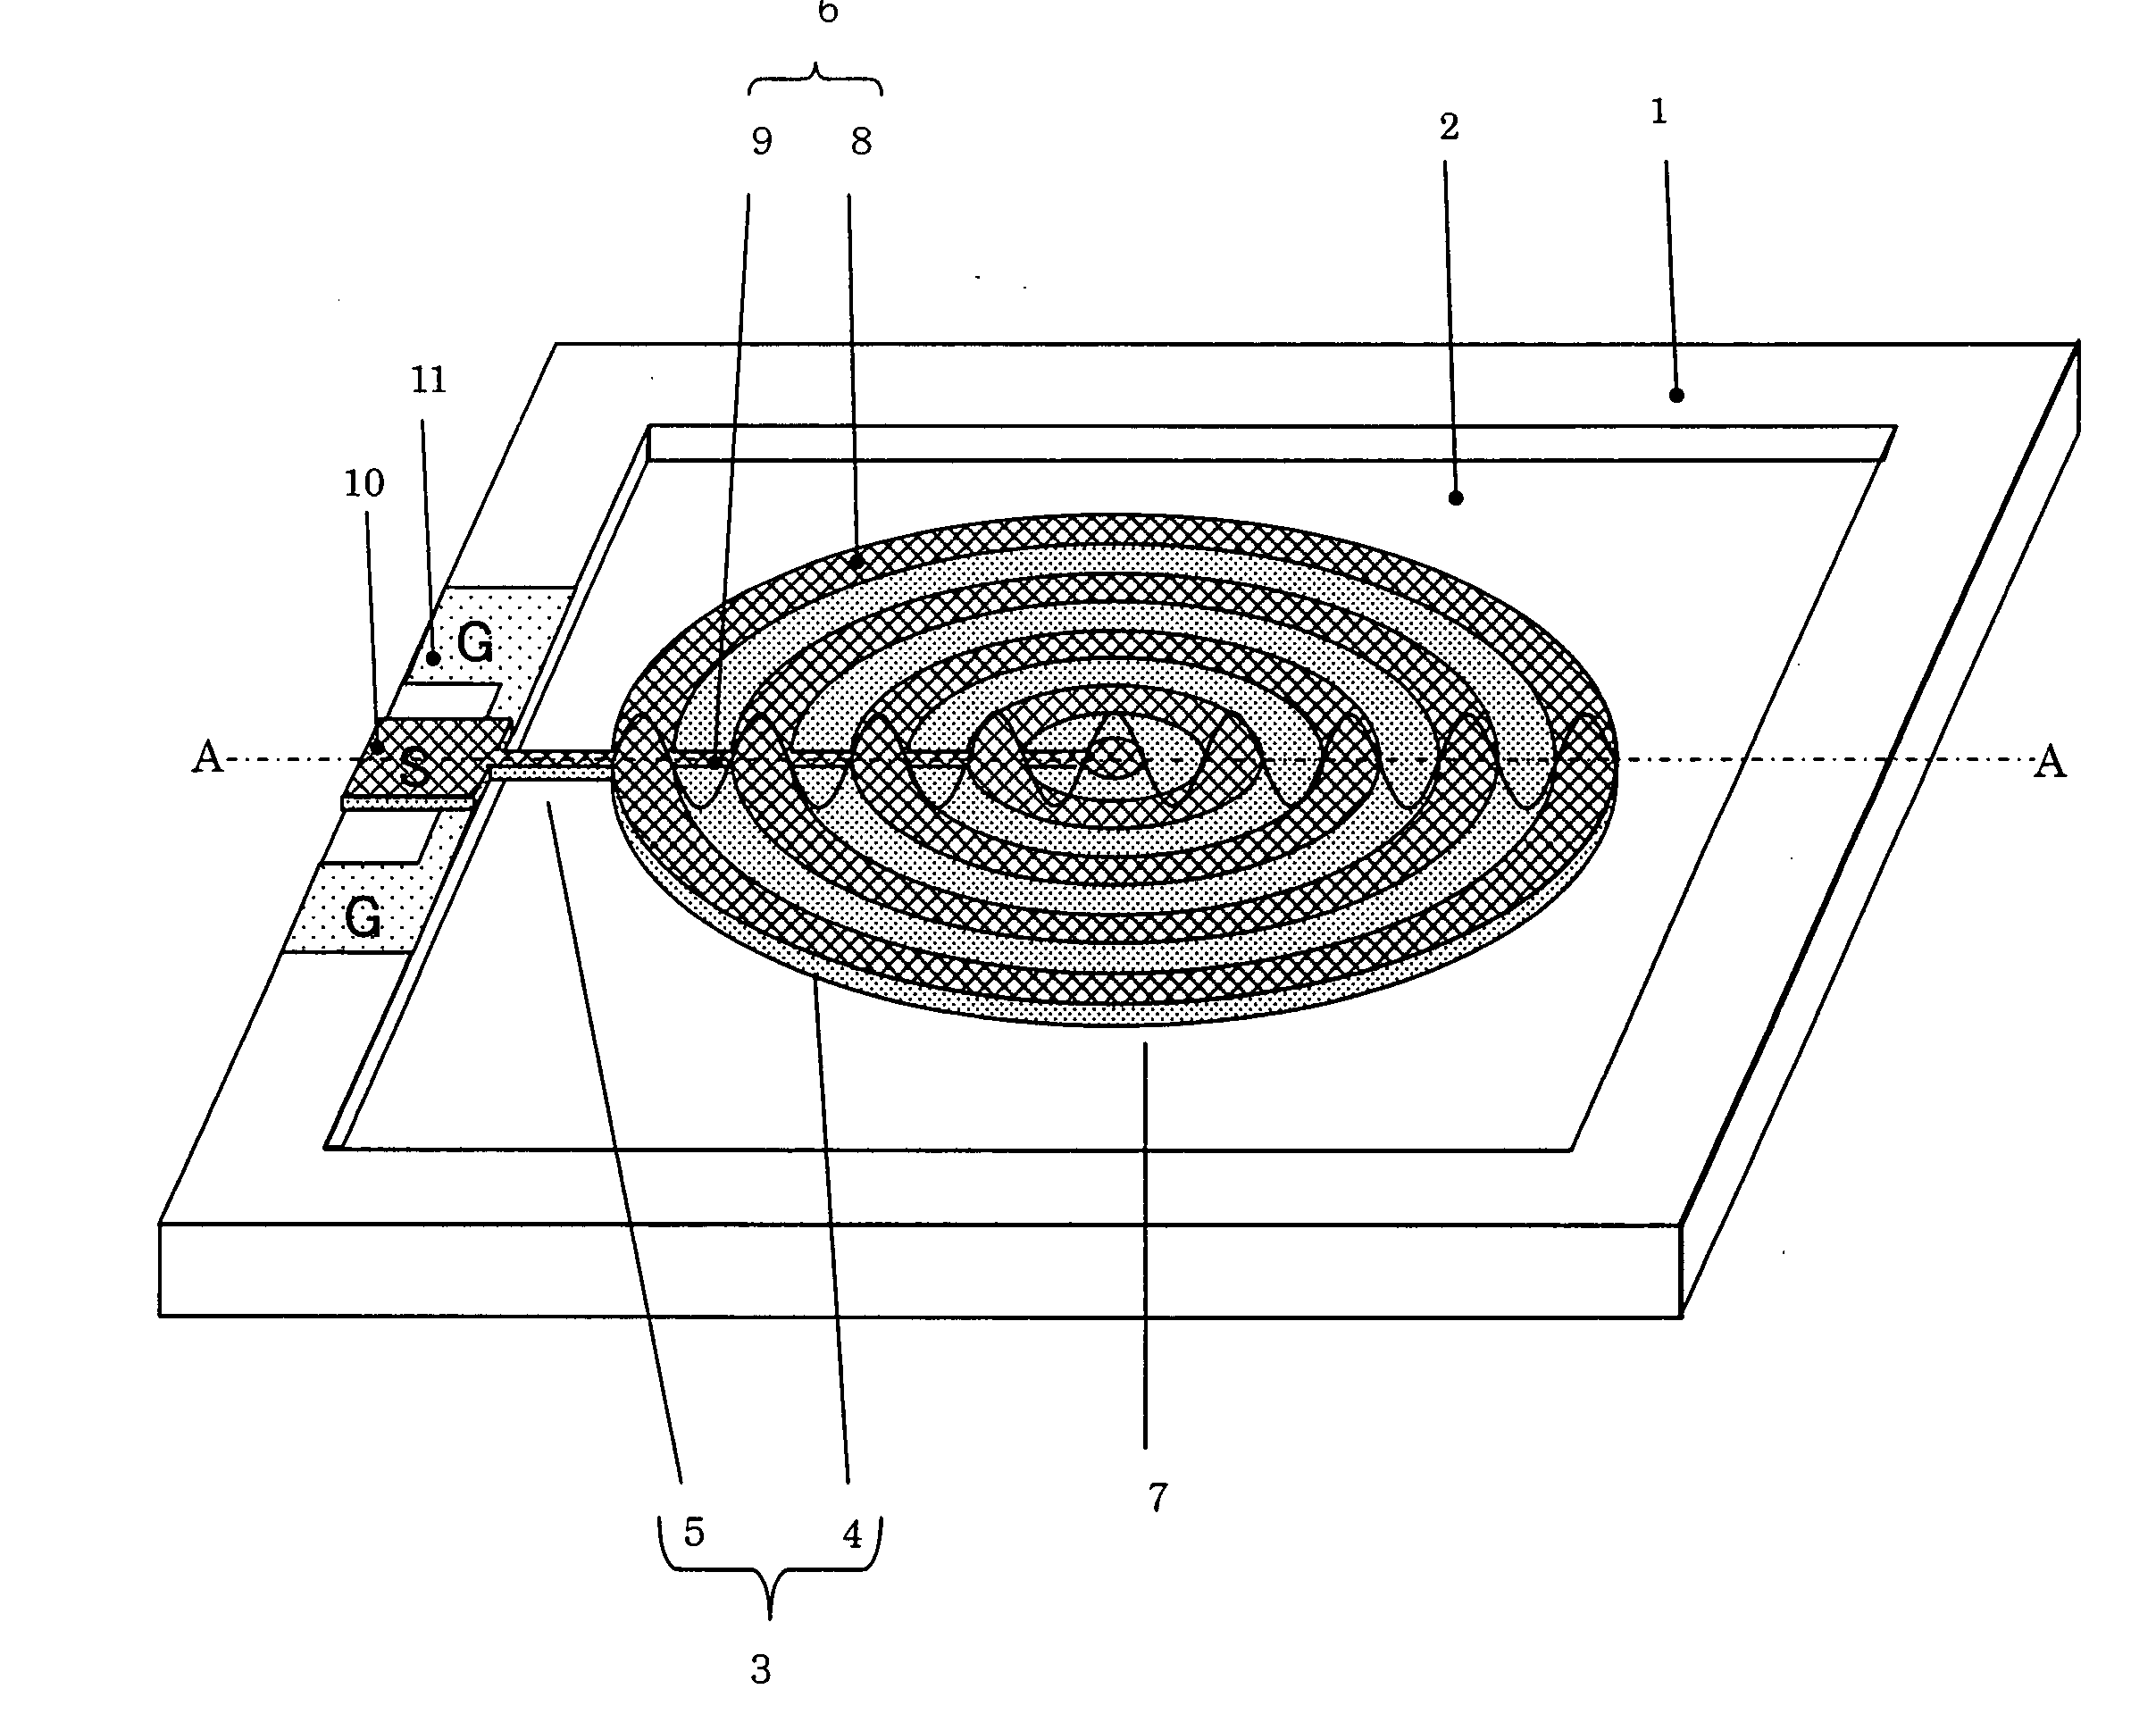 Thin-film piezoelectric resonator and filter circuit